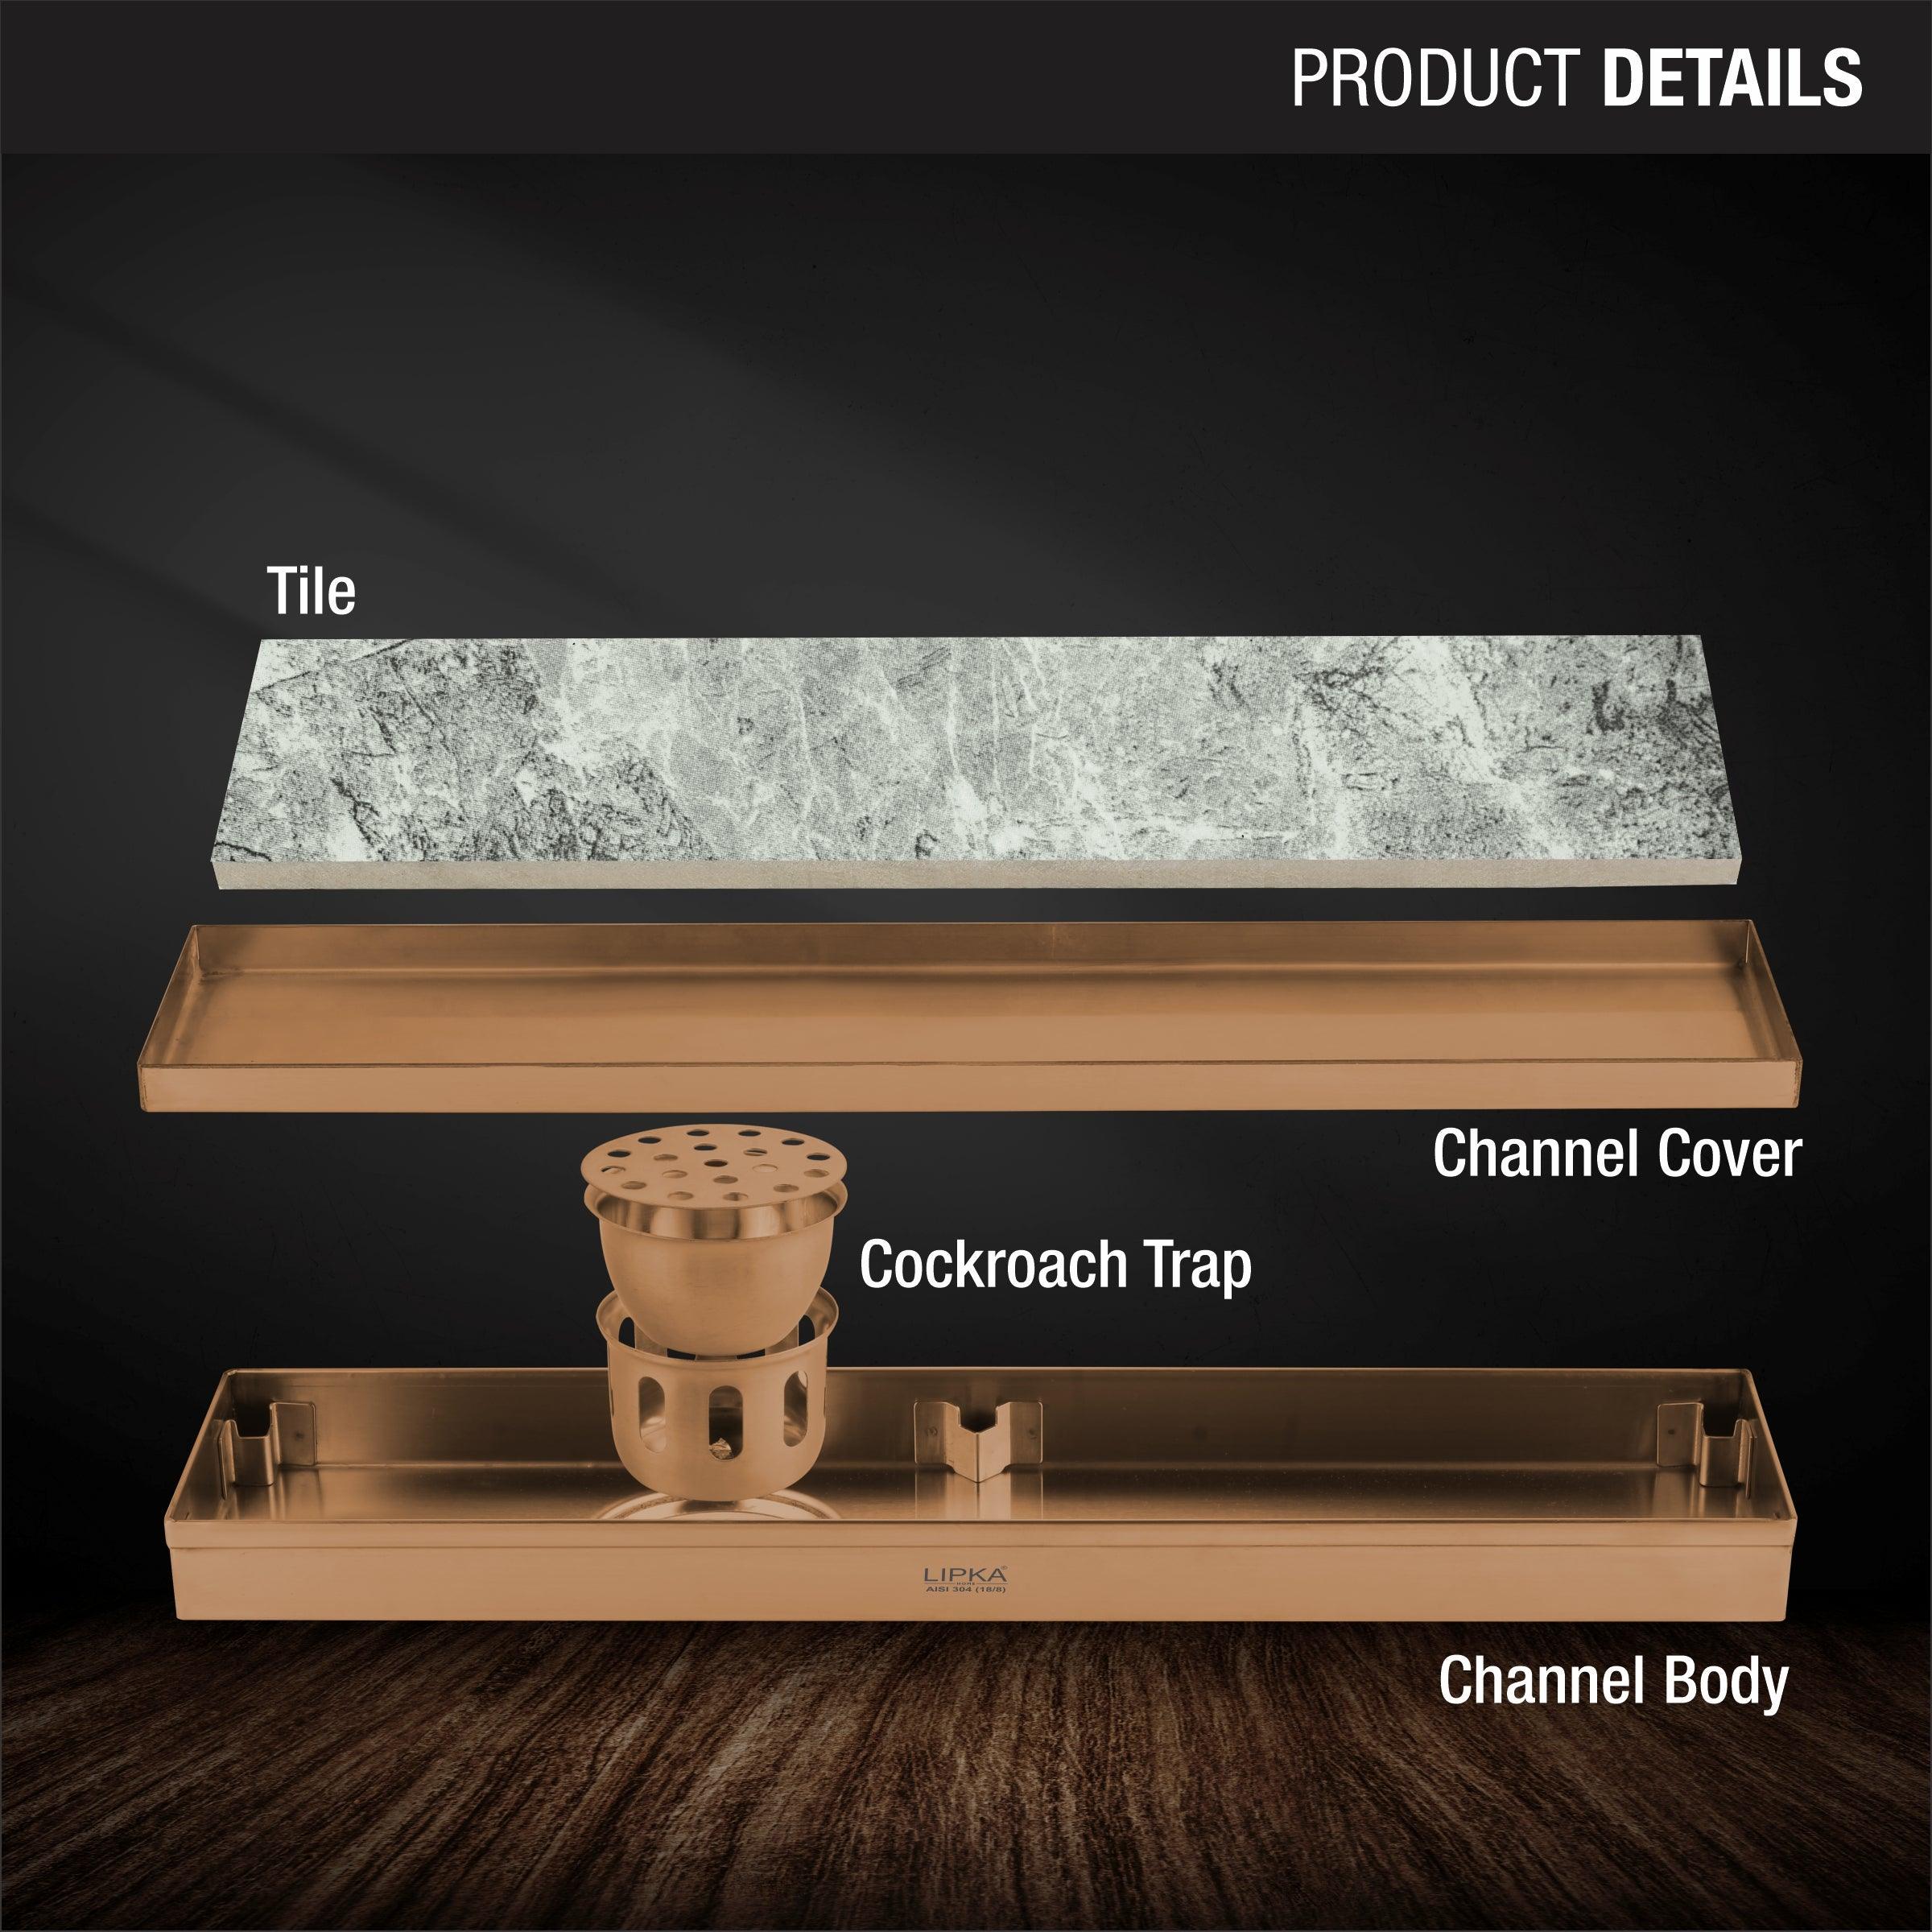 Tile Insert Shower Drain Channel - Antique Copper (32 x 5 Inches) product details